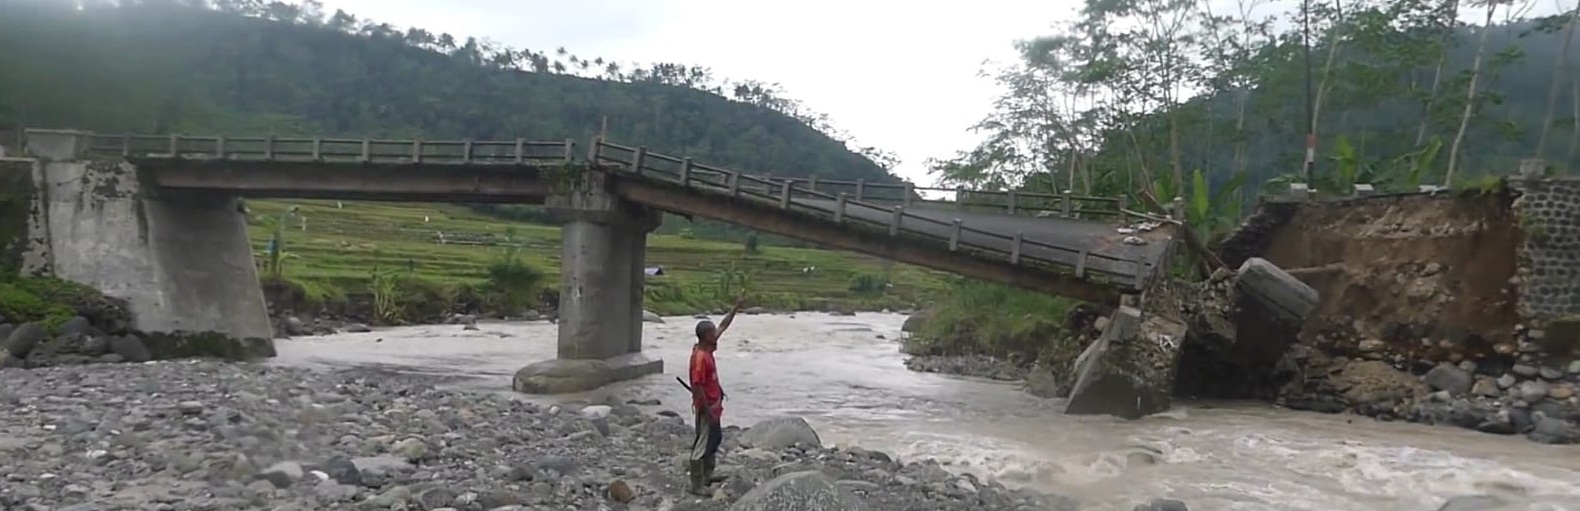 Jembatan Penghubung Banjarmangu dan Punggelan di Banjarnegara Ambruk, Warga Putar 20 Km 